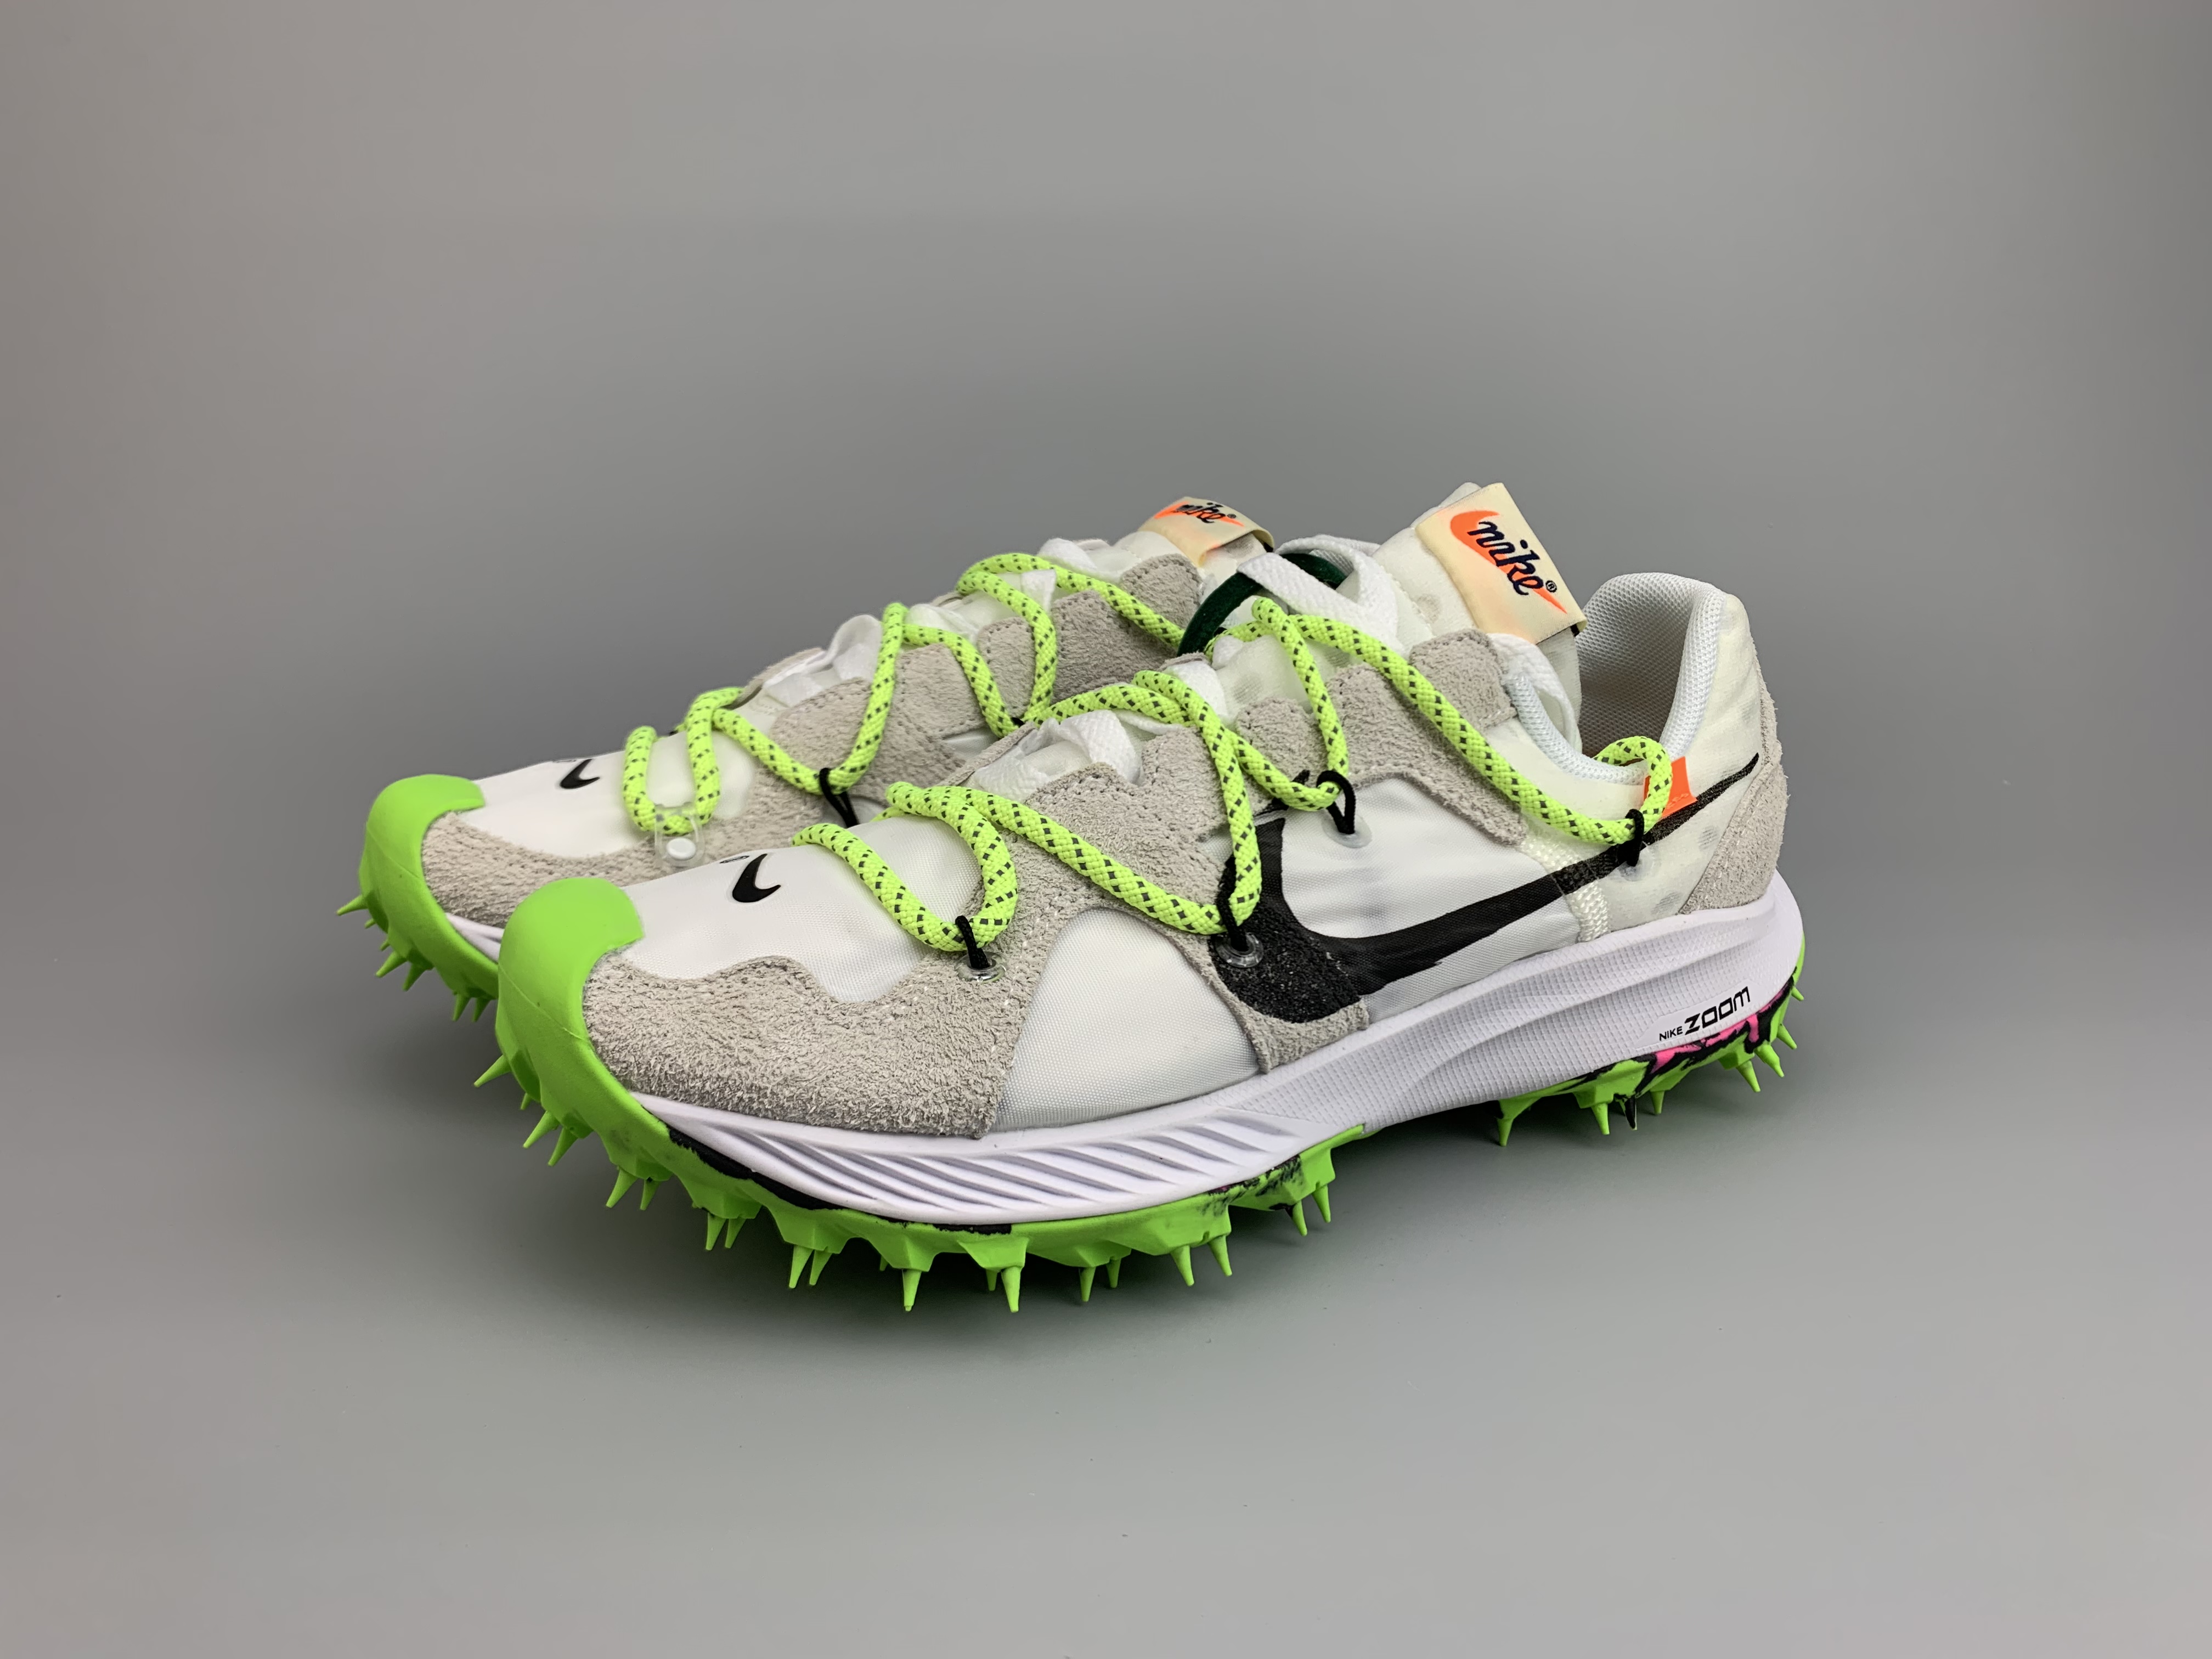 Off-White x Nike Zoom Terra Kiger 5 Athlete in Progress Green Grey Black Shoes